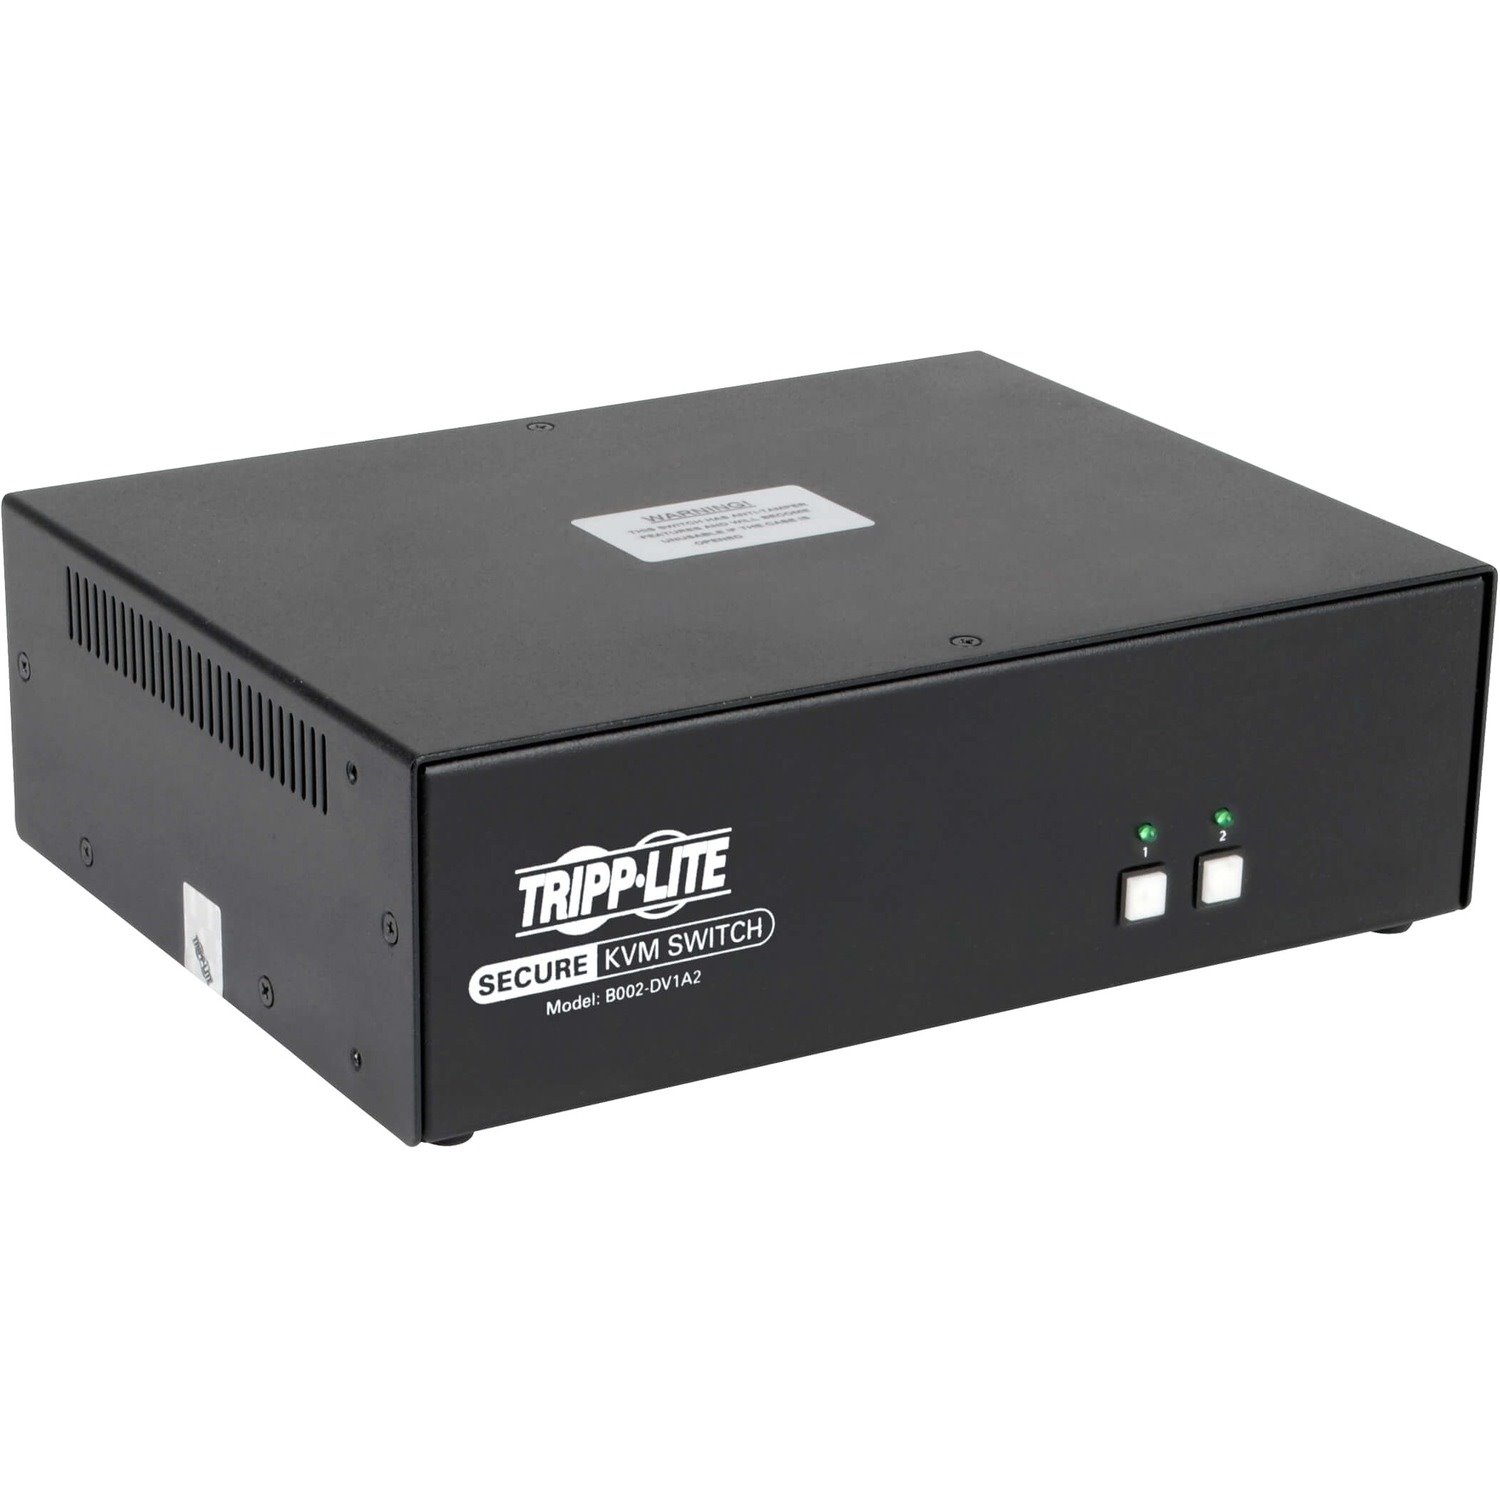 Tripp Lite Secure KVM Switch 2-Port DVI + Audio NIAP PP3.0 Certified DVI-I